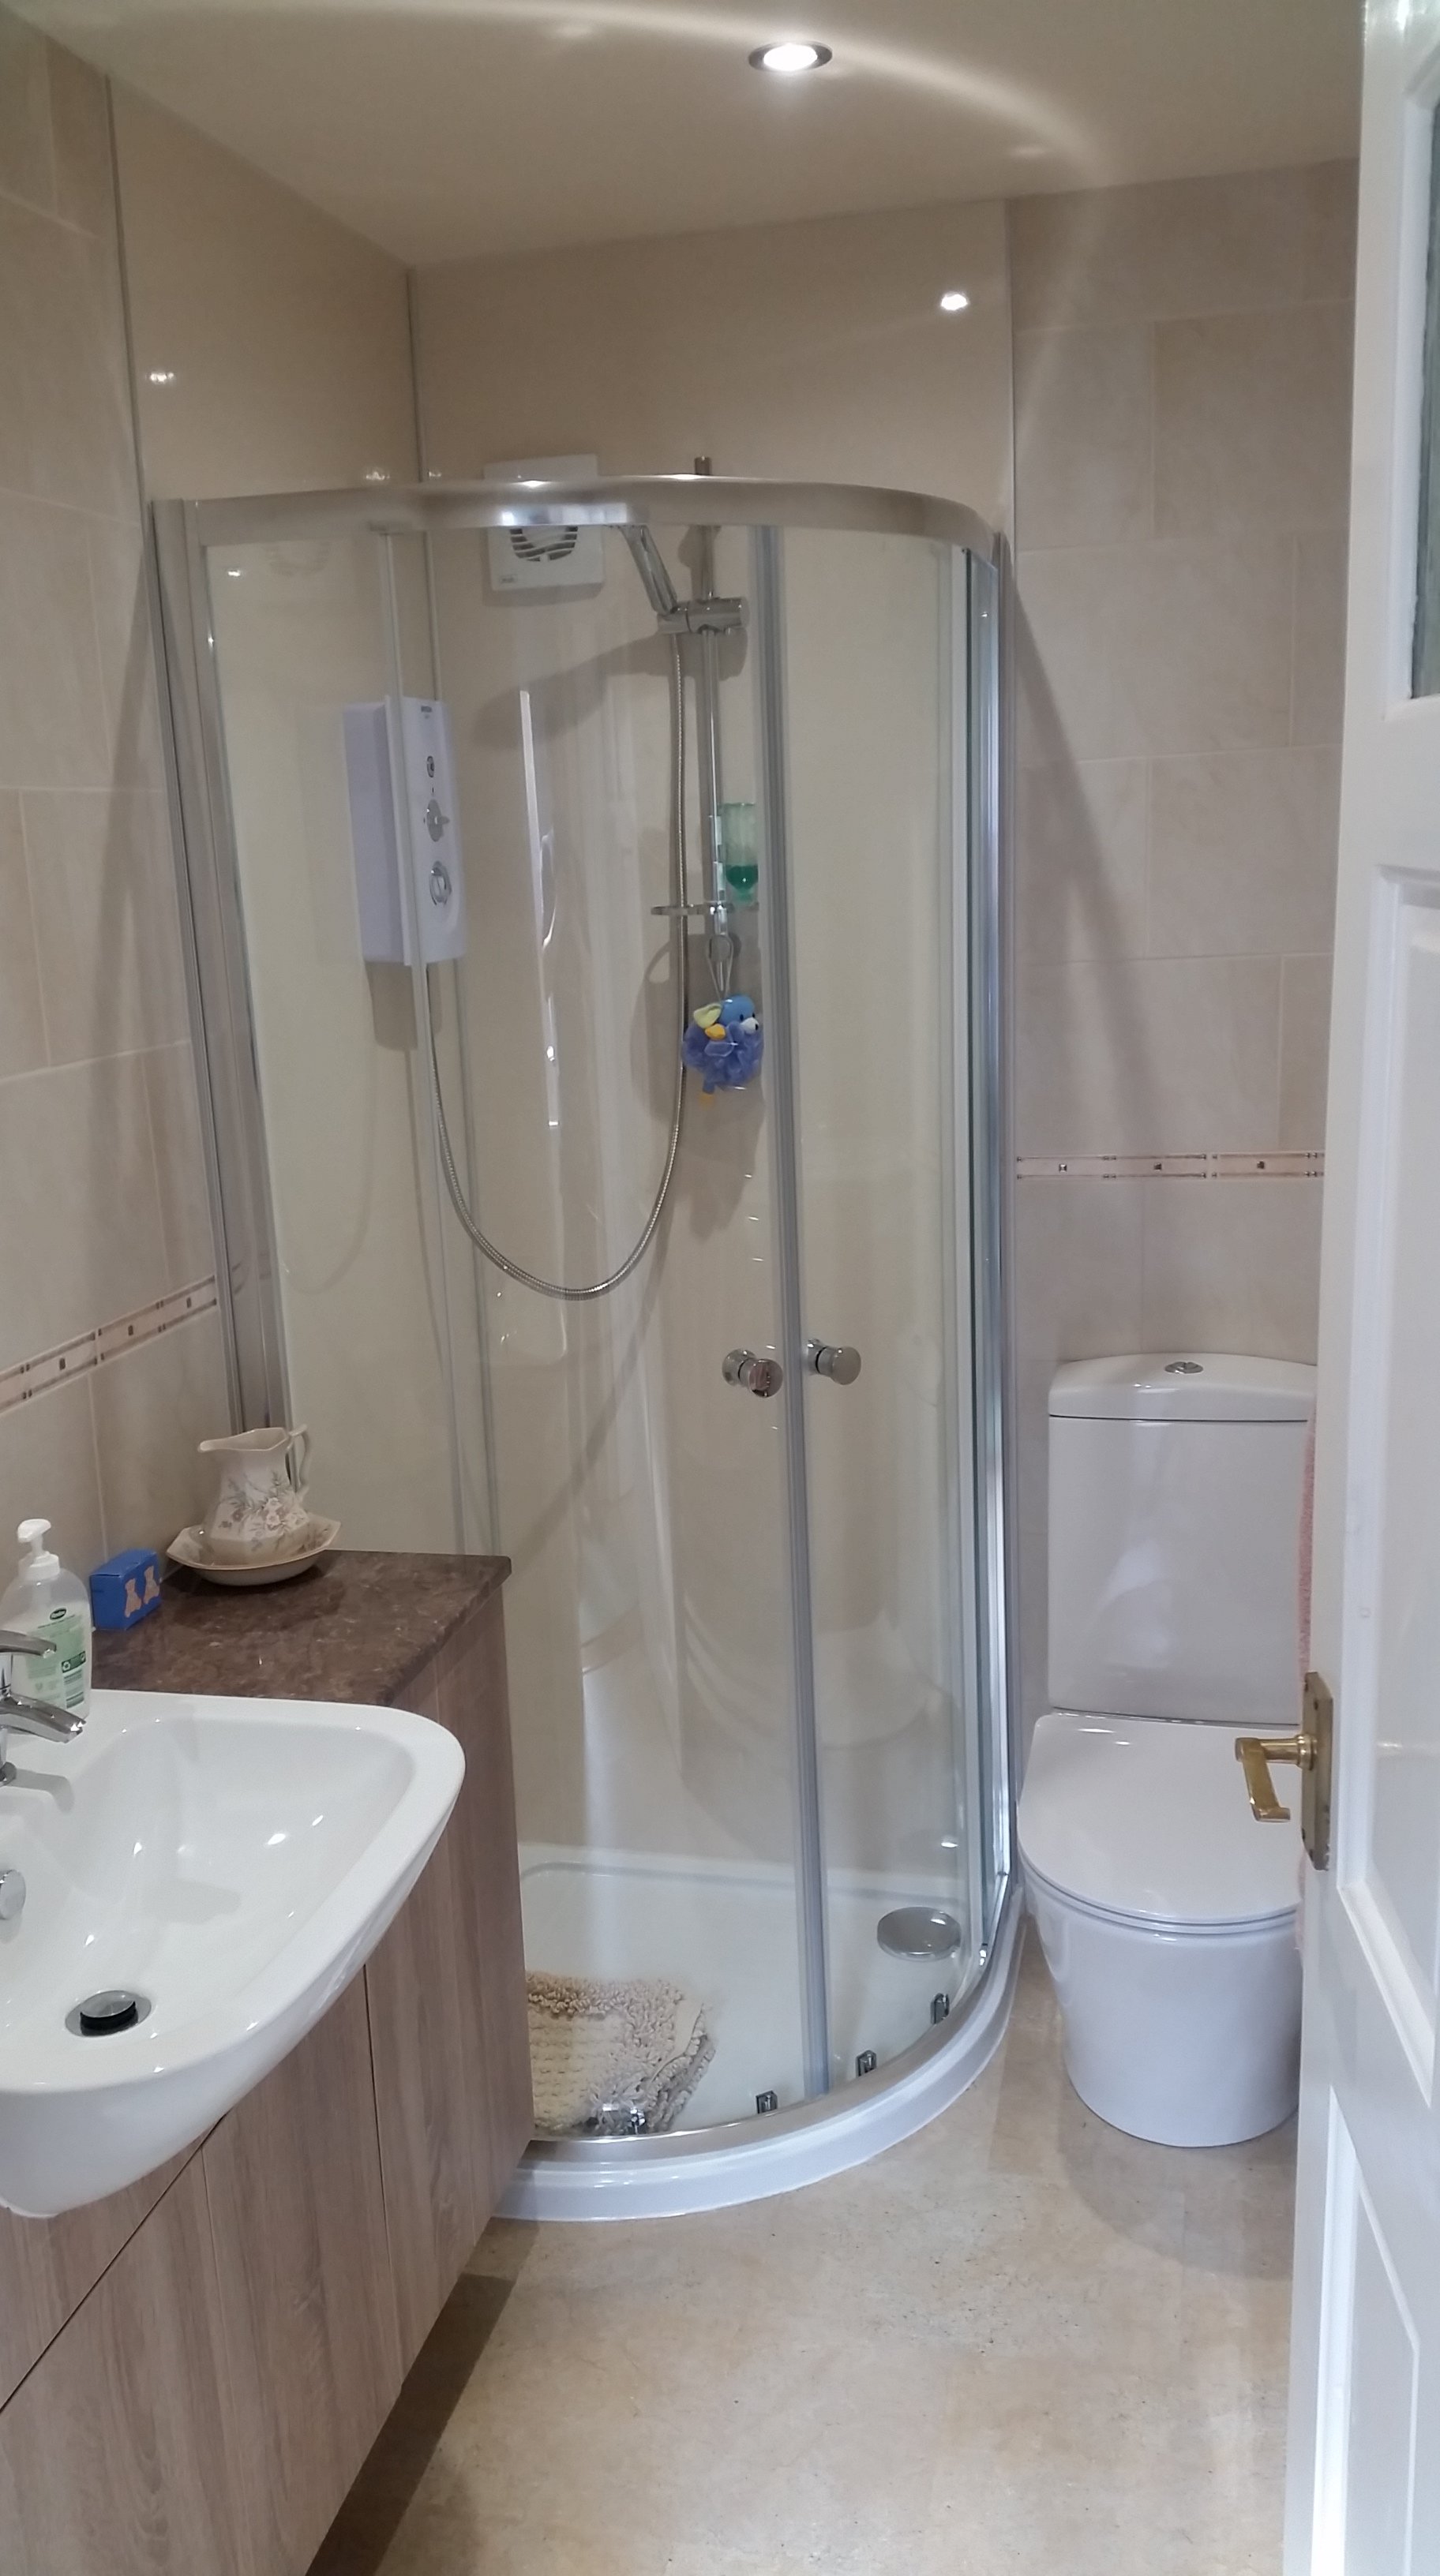 New bathroom install. Corner shower and modern clean design